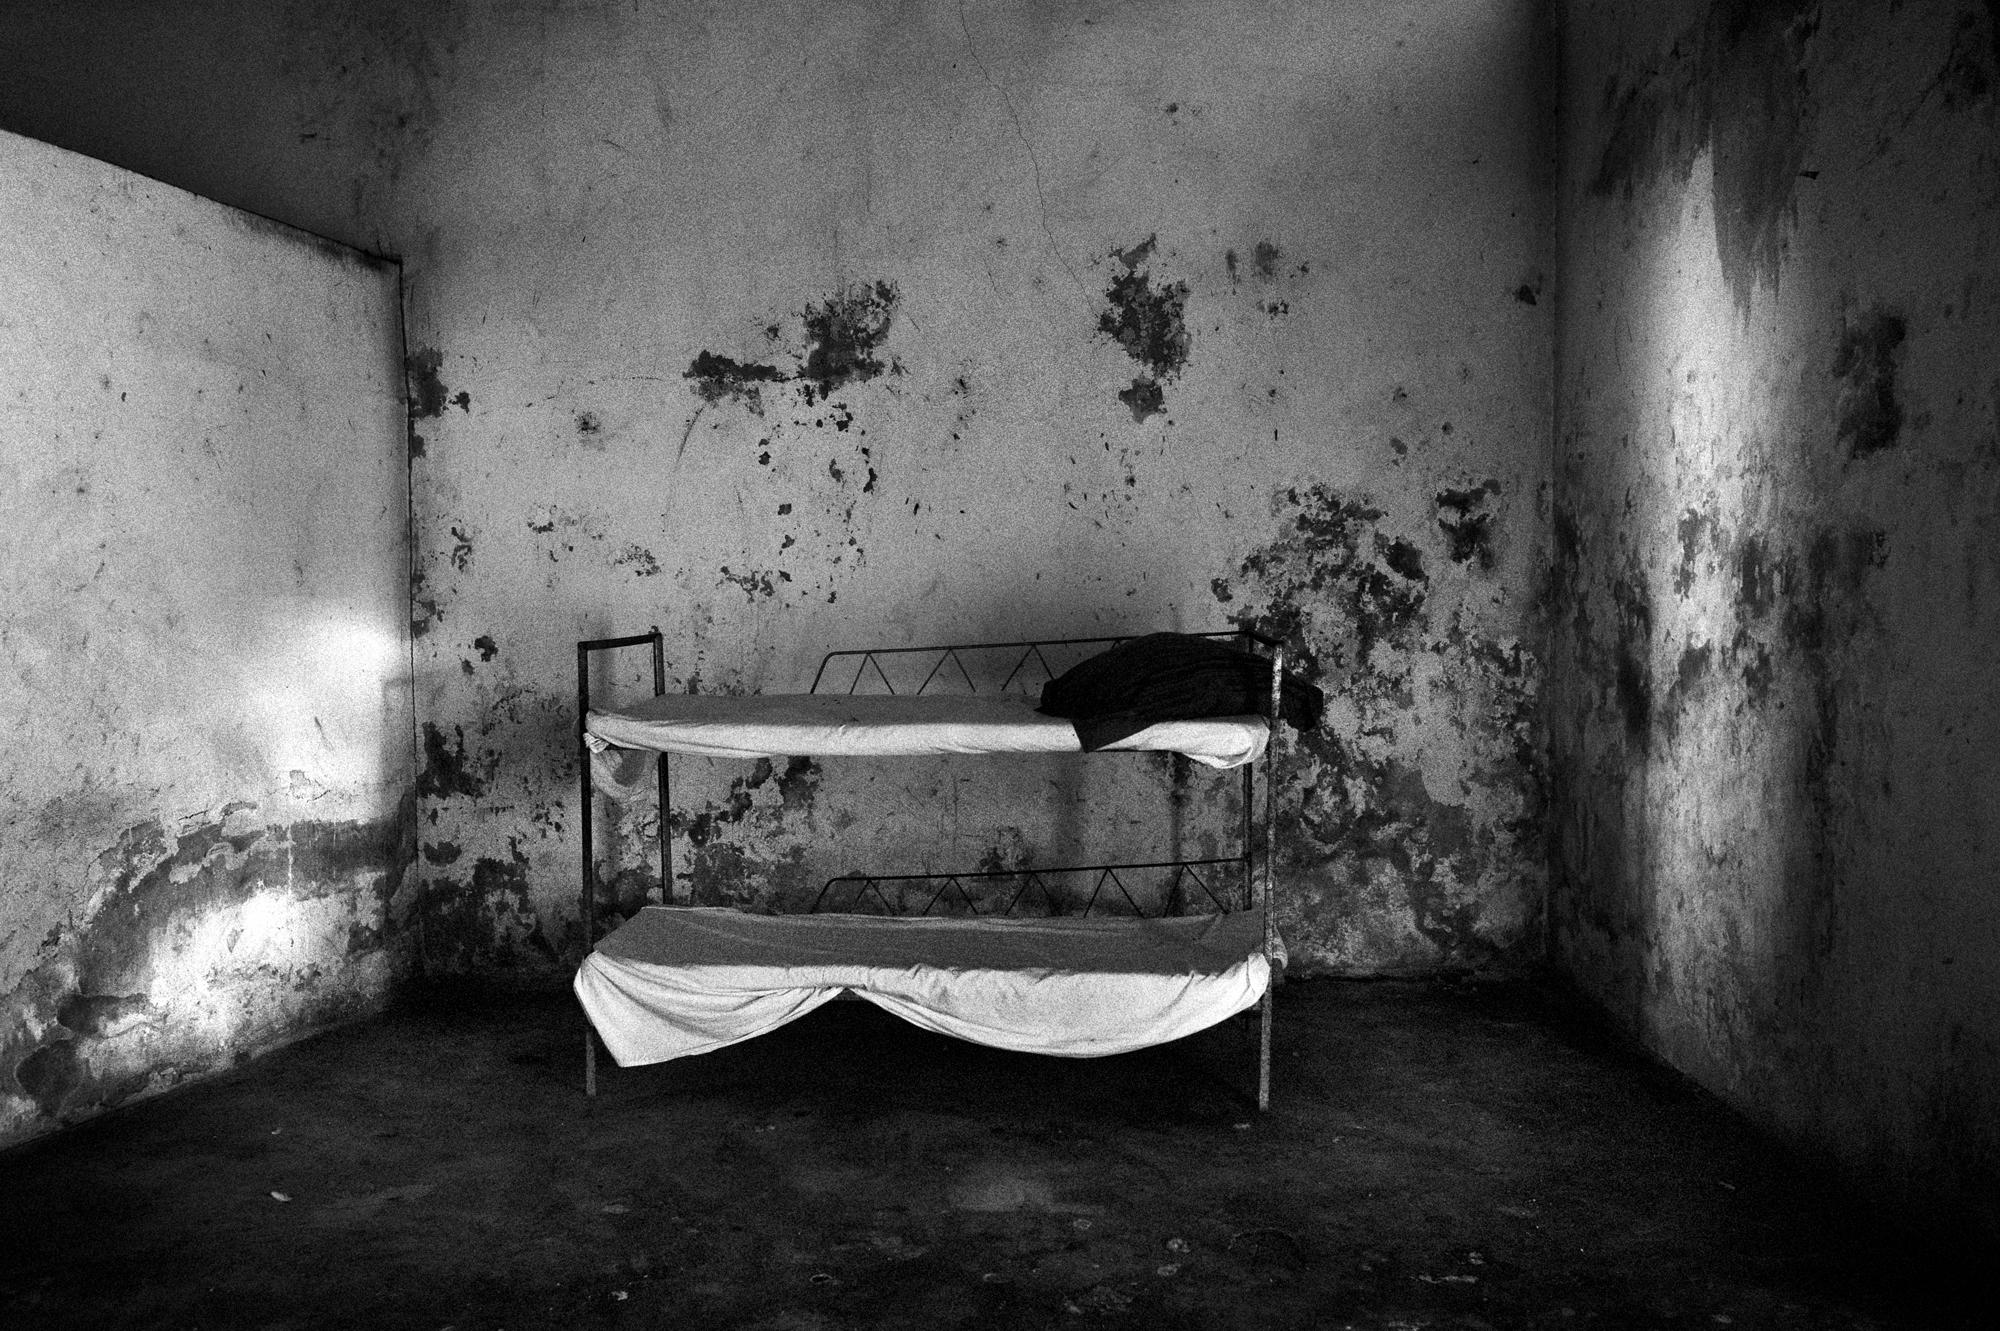 Hospice/ Haiti - Petit Guave, Haiti.
June 2010.
A double bed at the...